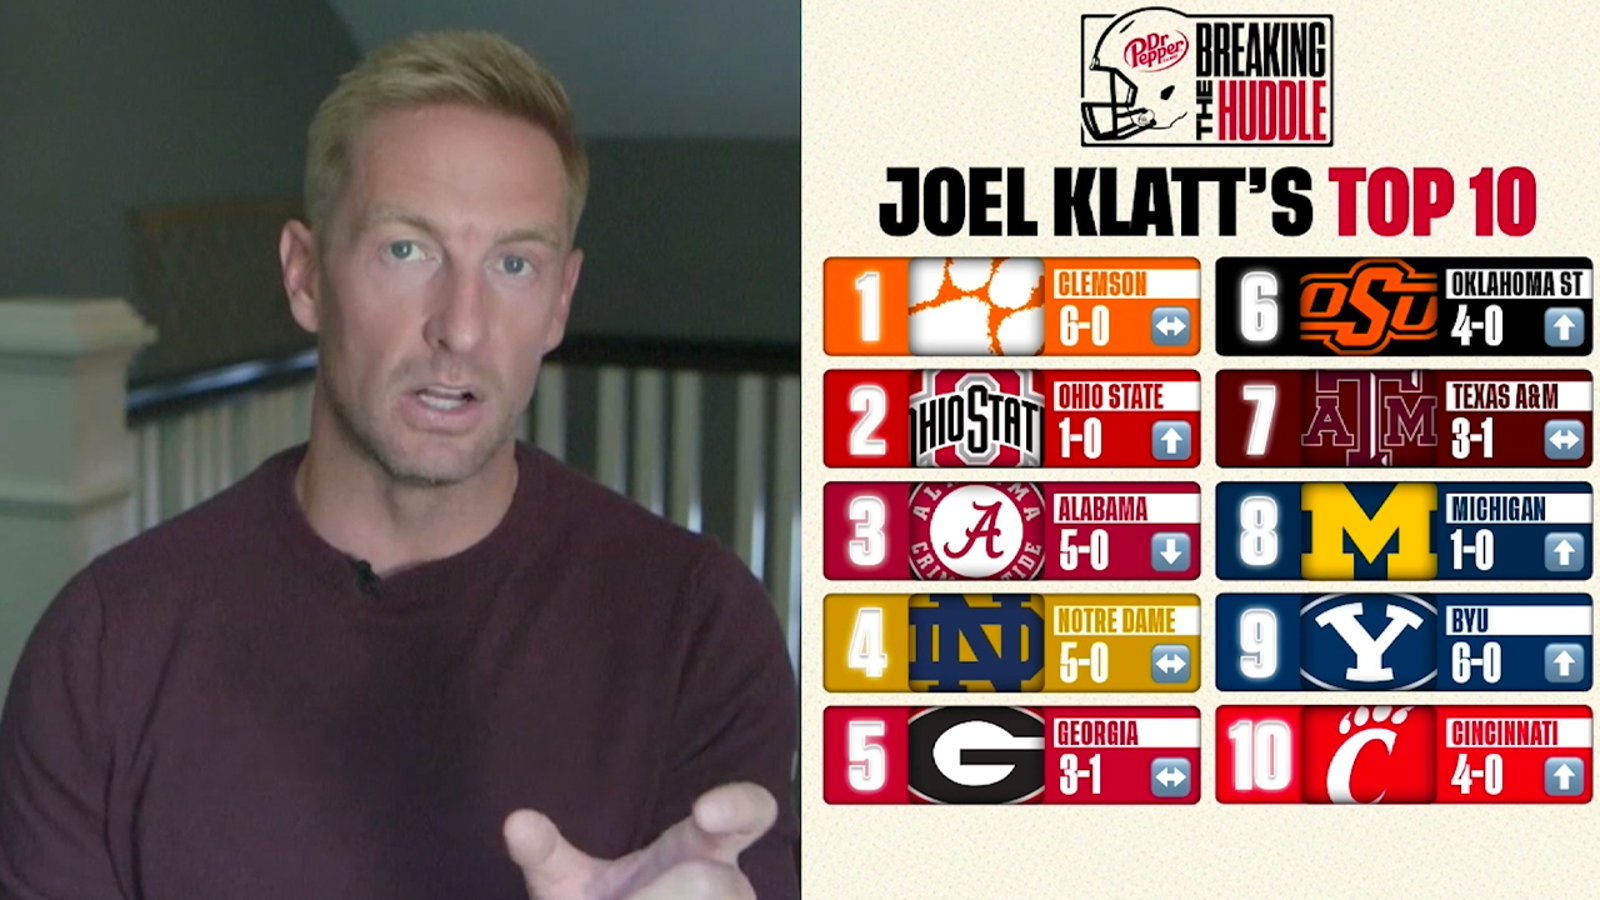 Cincinnati, Michigan join Joel Klatt's Top 10 | Breaking the Huddle with Joel Klatt